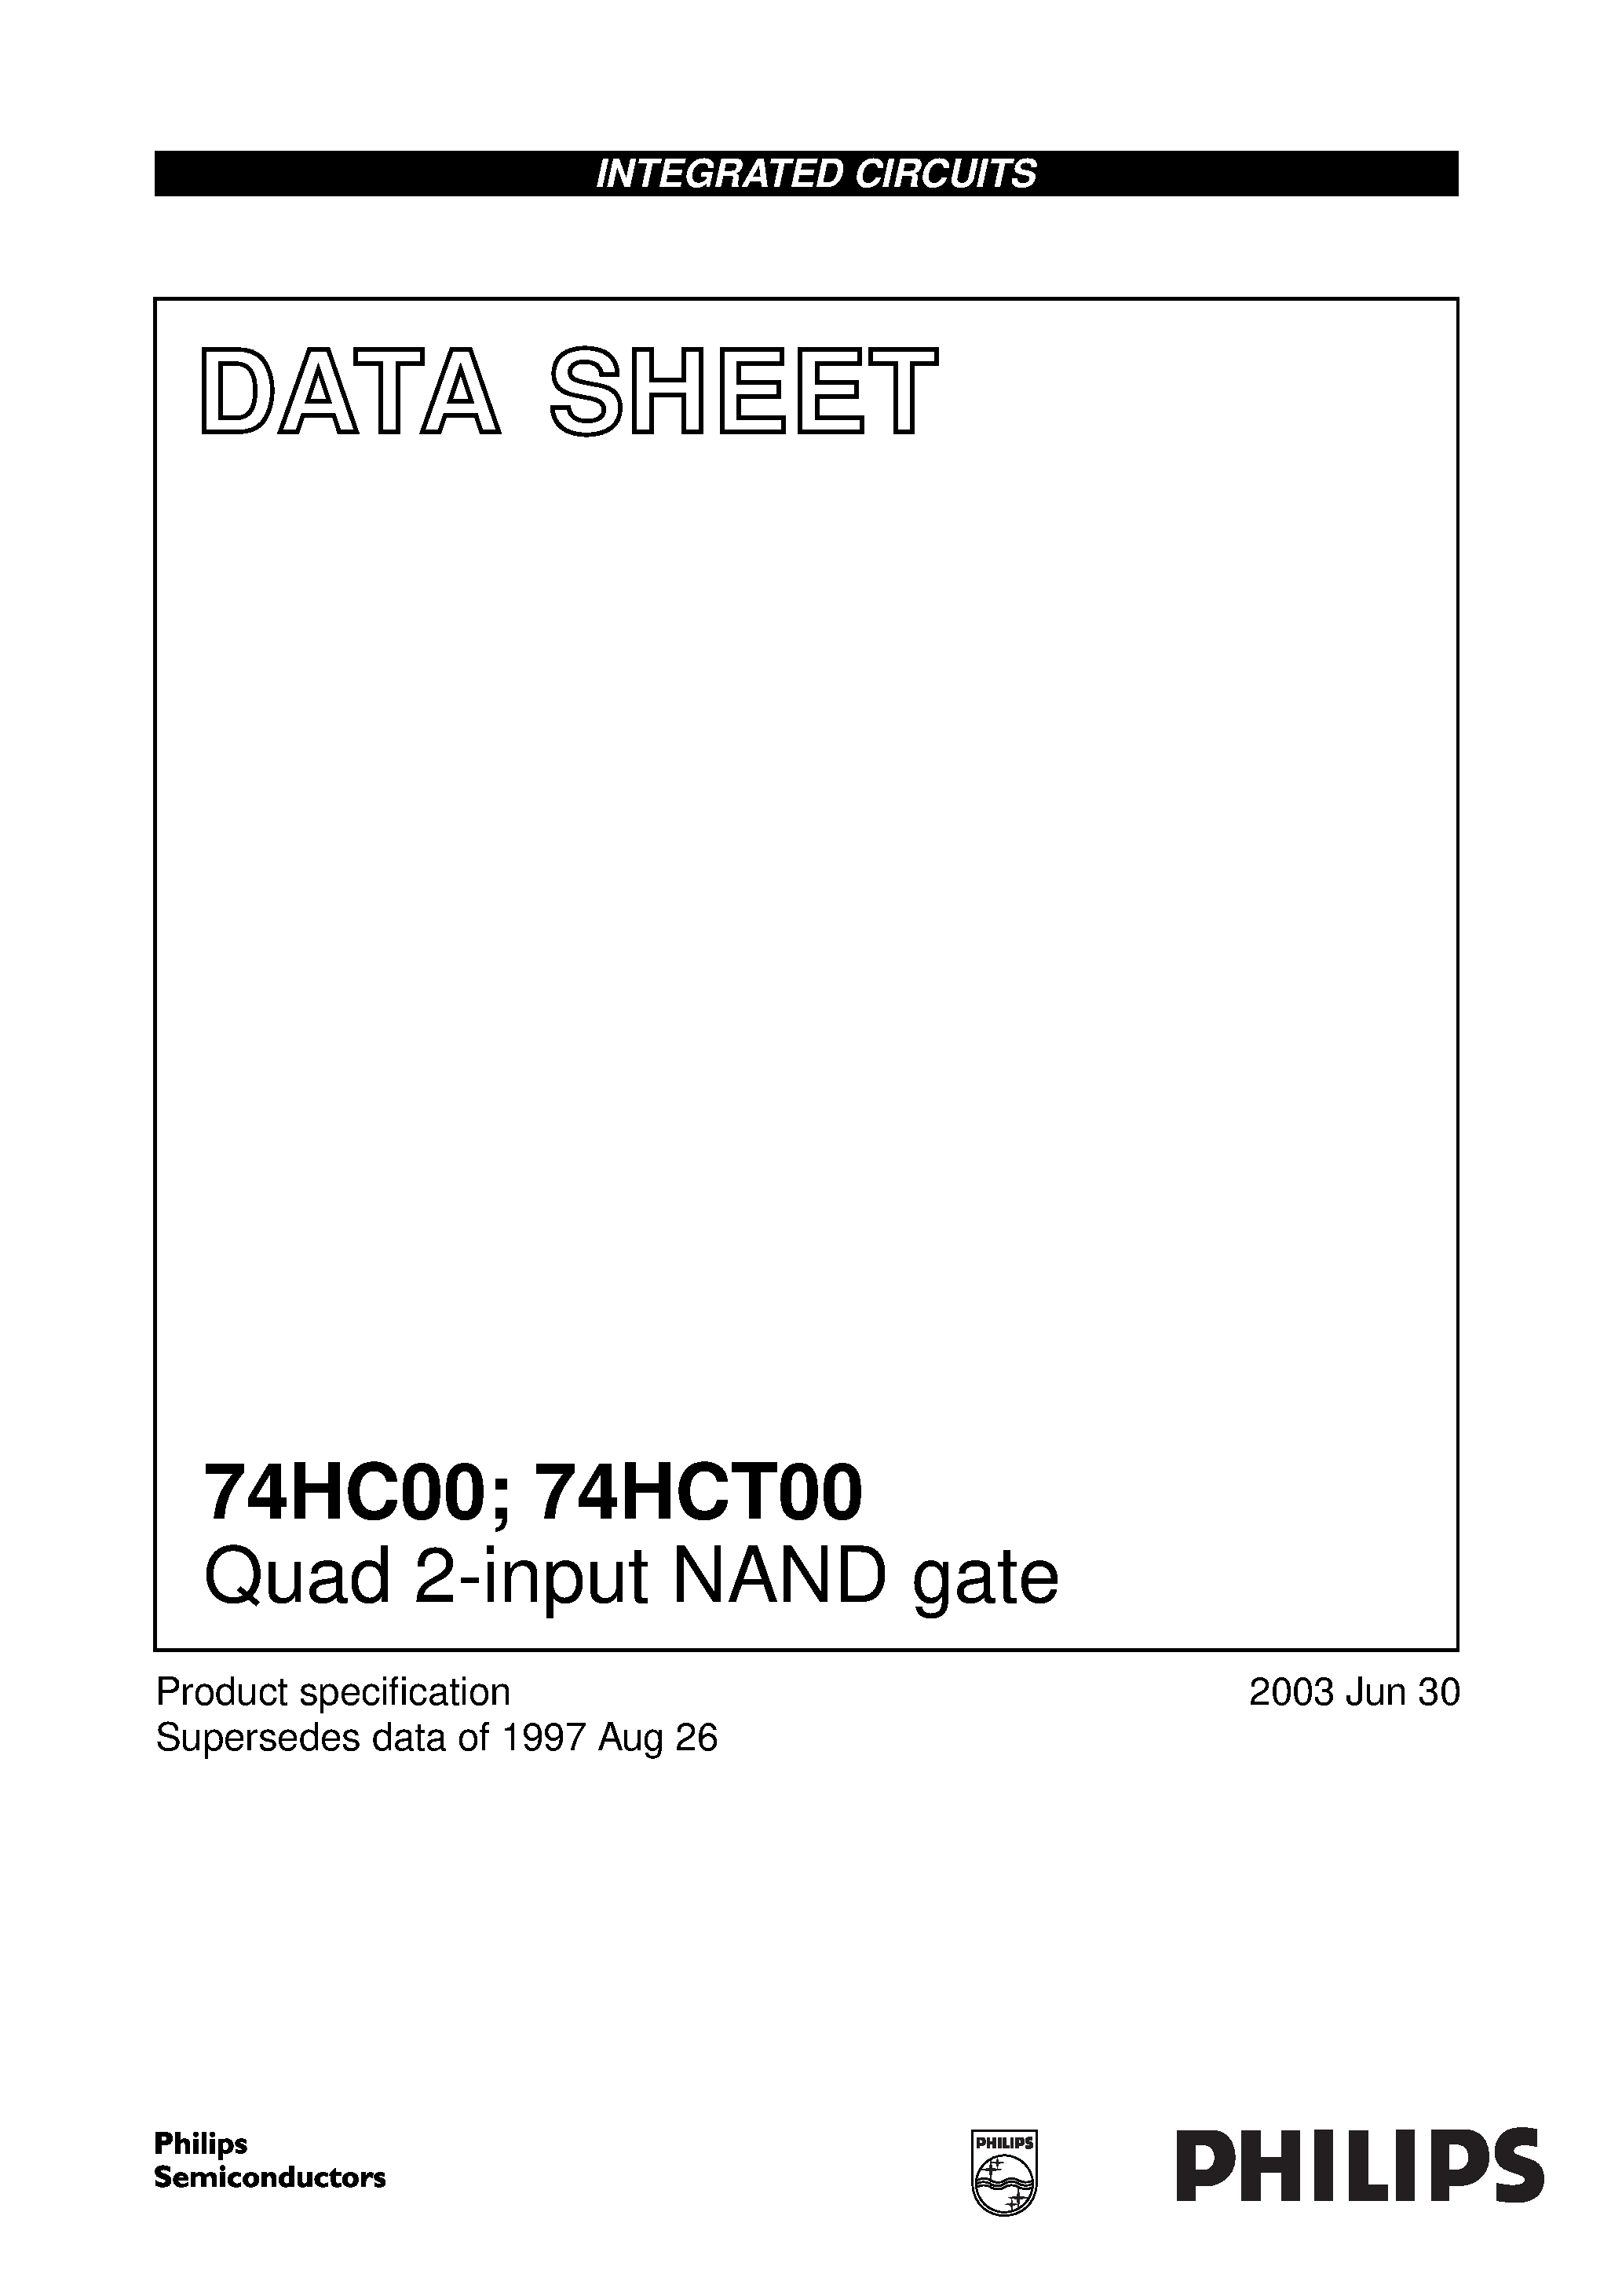 Datasheet 74HCT00BQ - Quad 2-input NAND gate page 1